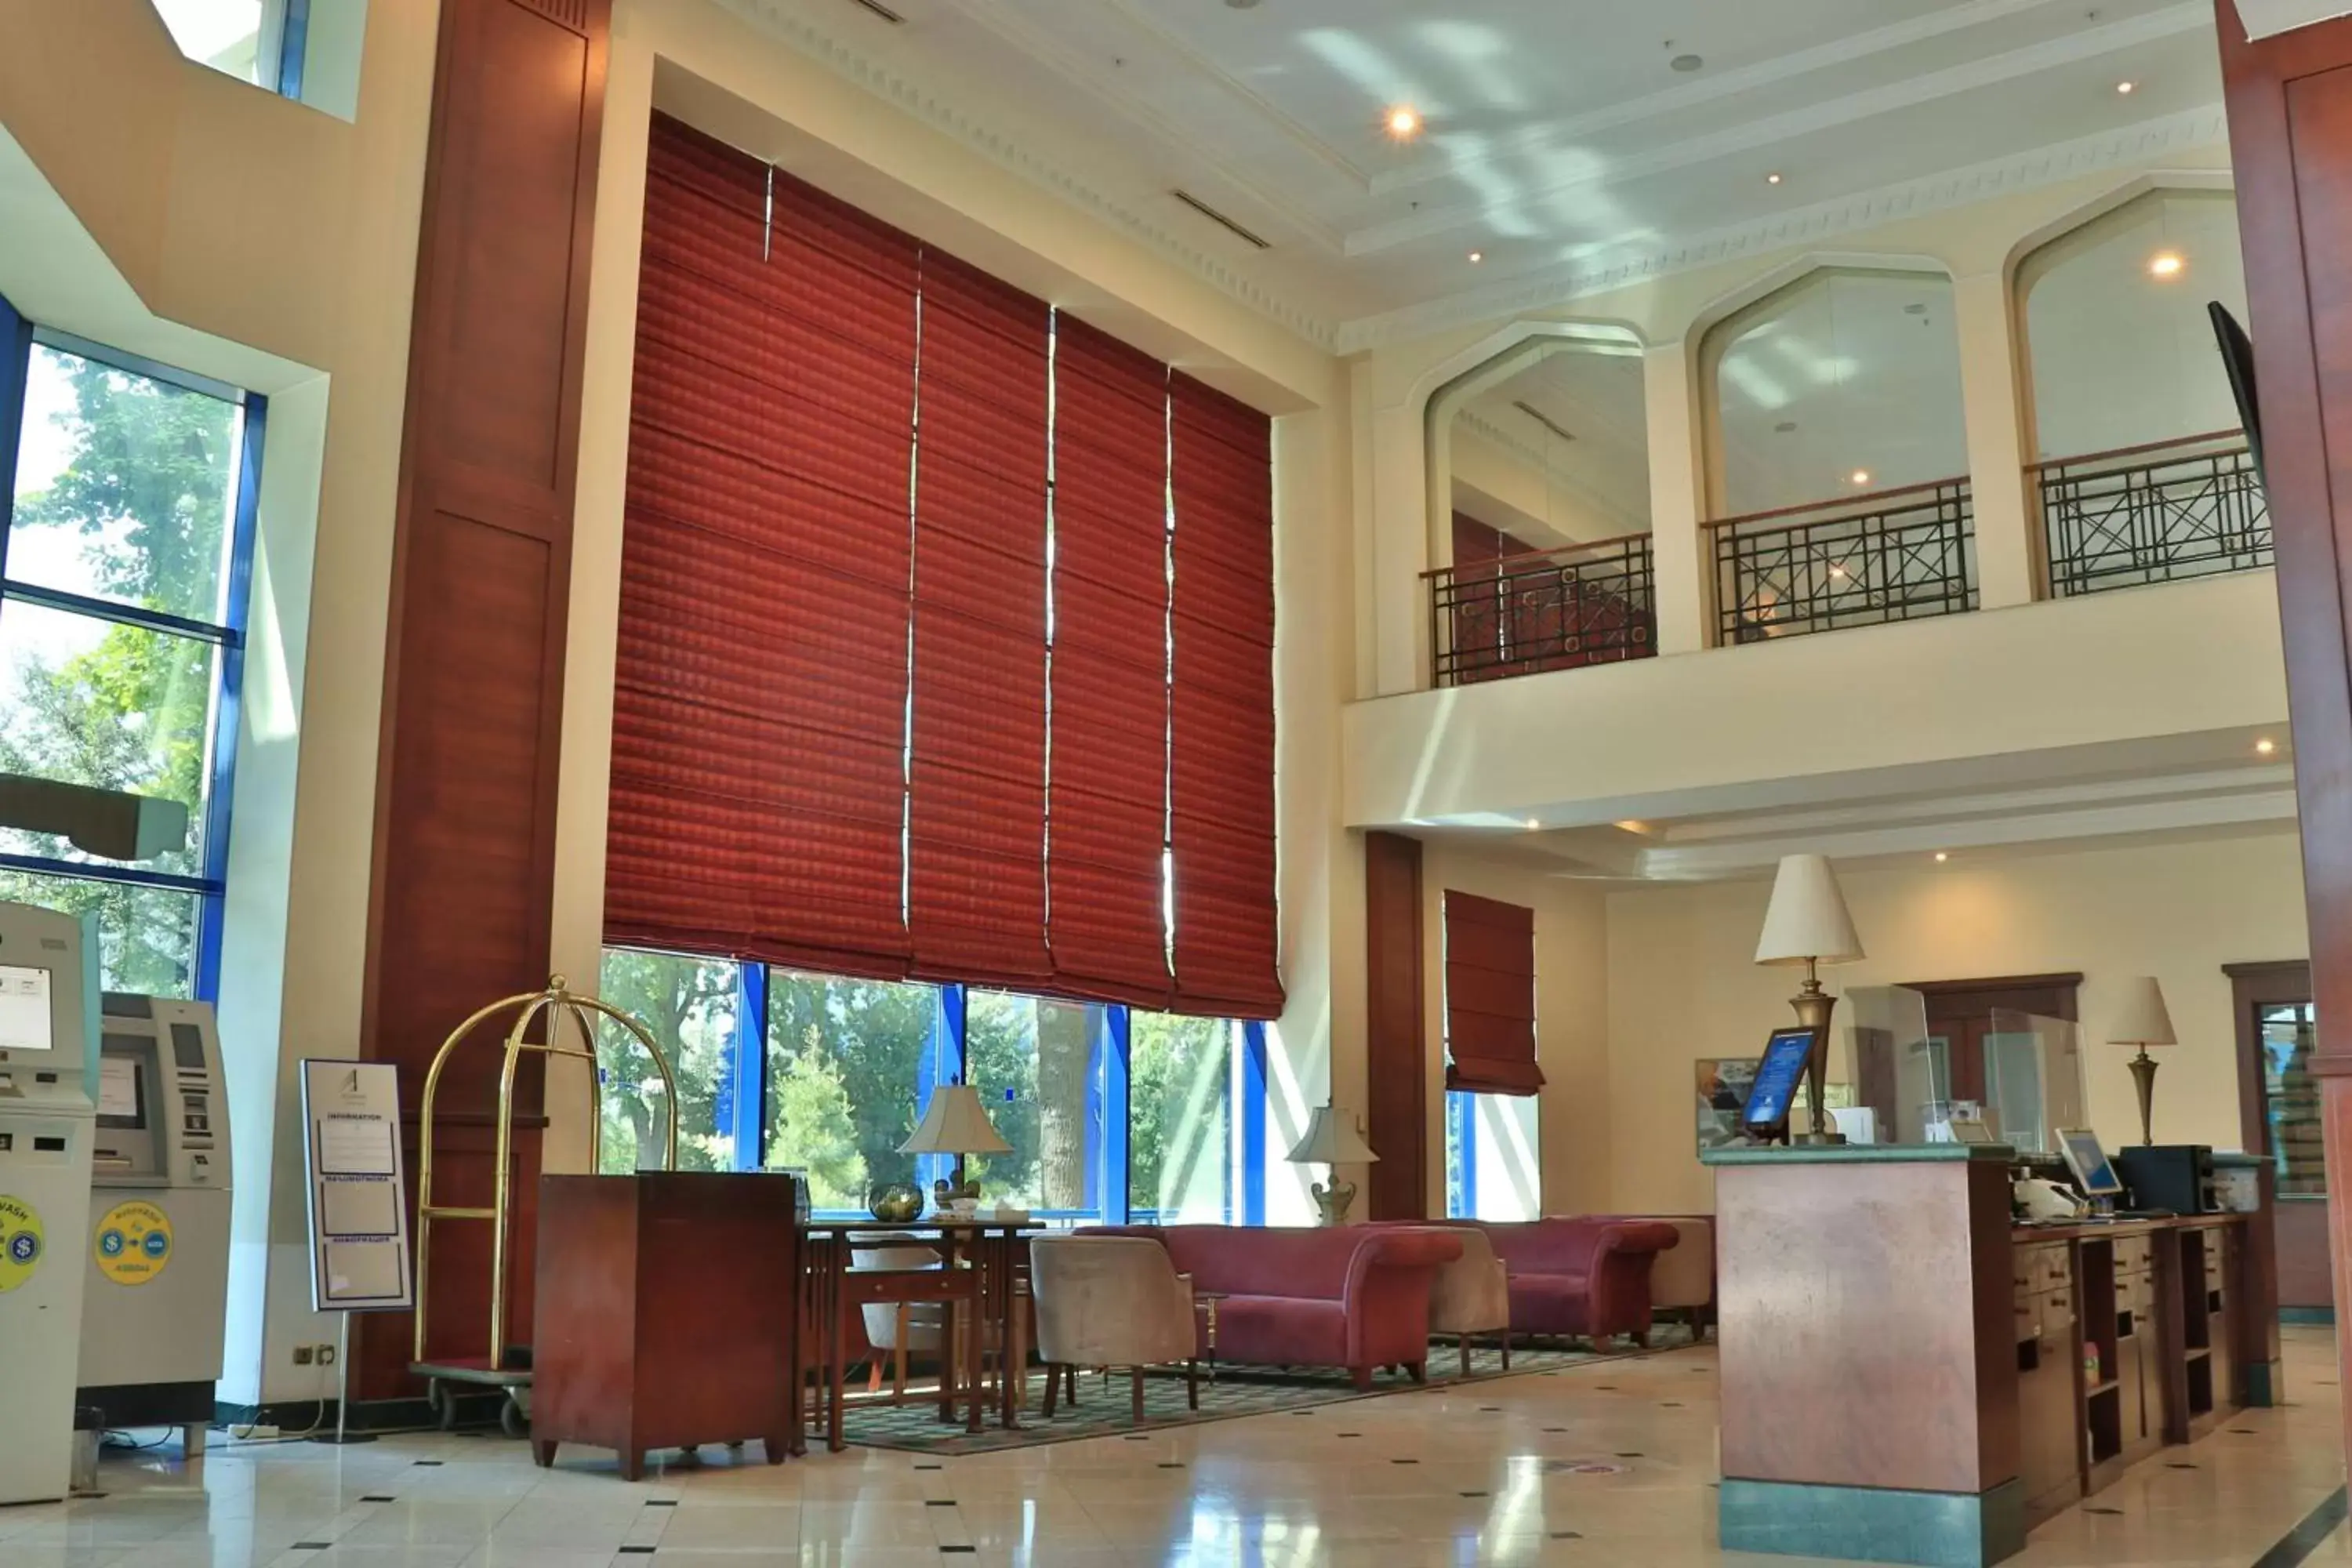 Lobby or reception in Radisson Blu Hotel, Tashkent